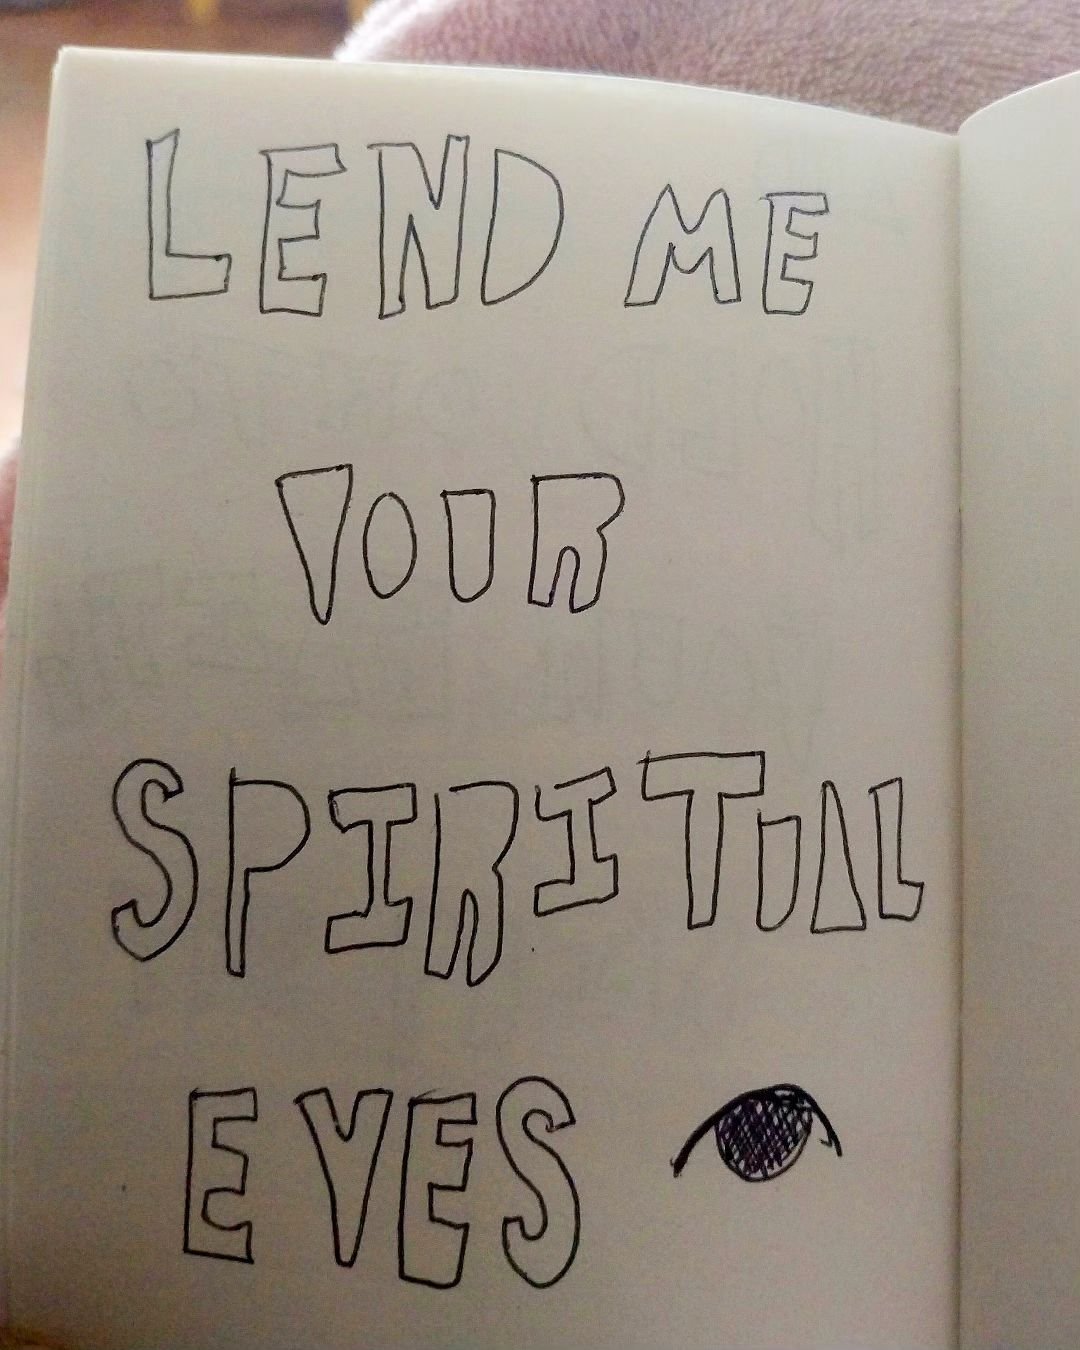 &quot;Can I lend your spiritual eyes?&quot; 

&quot;Erm...&quot;

#spiritualeyes #lend #sketchbook